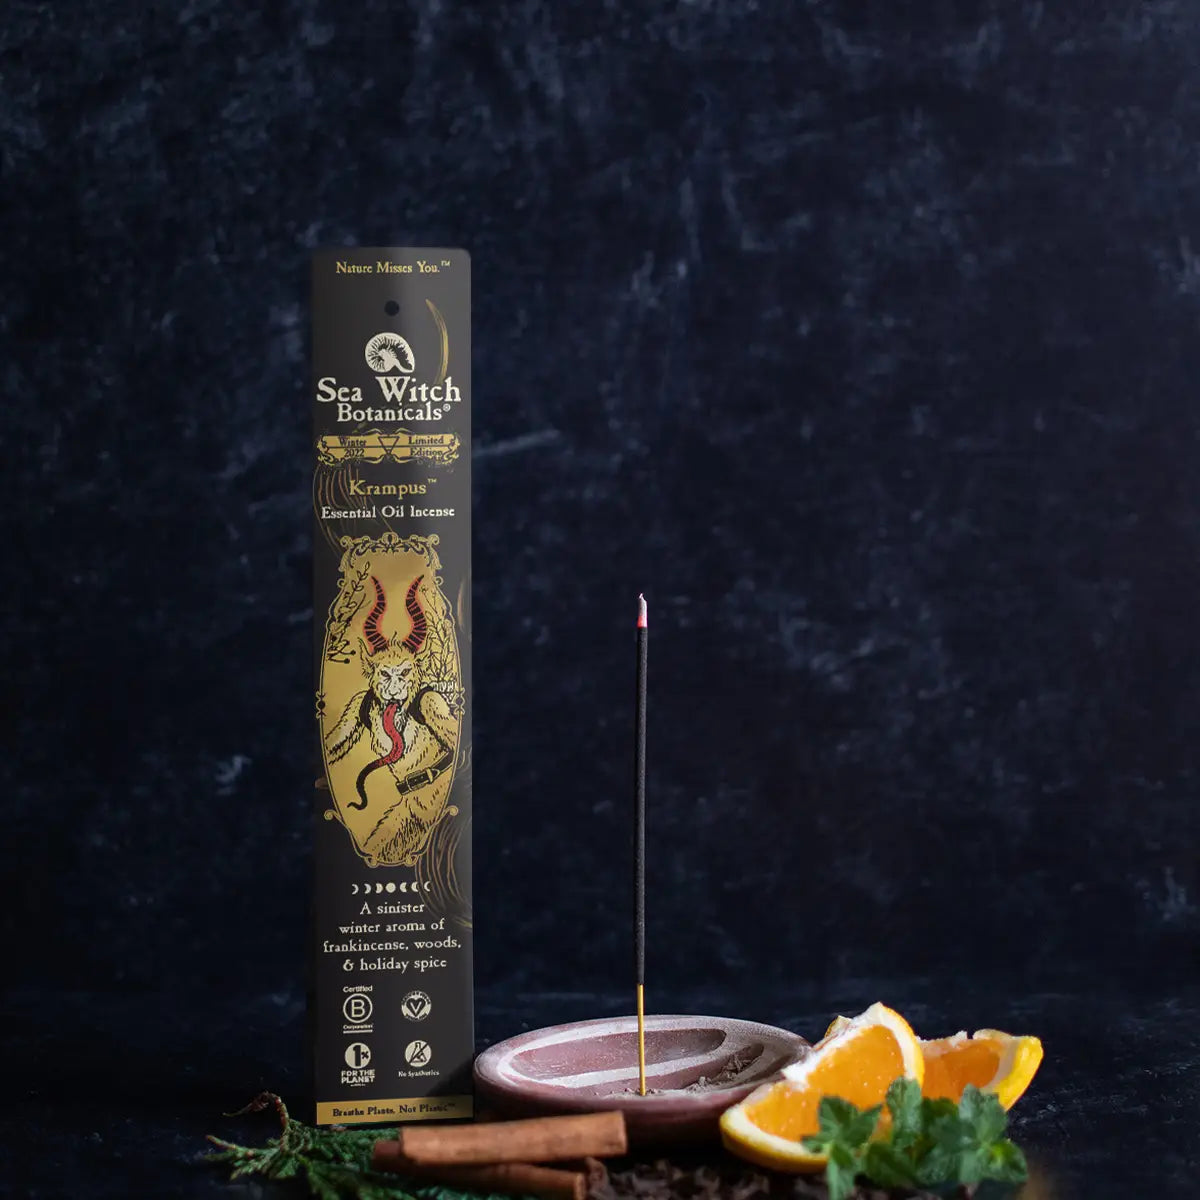 Krampus Essential Oil Incense from Sea Witch Botanicals